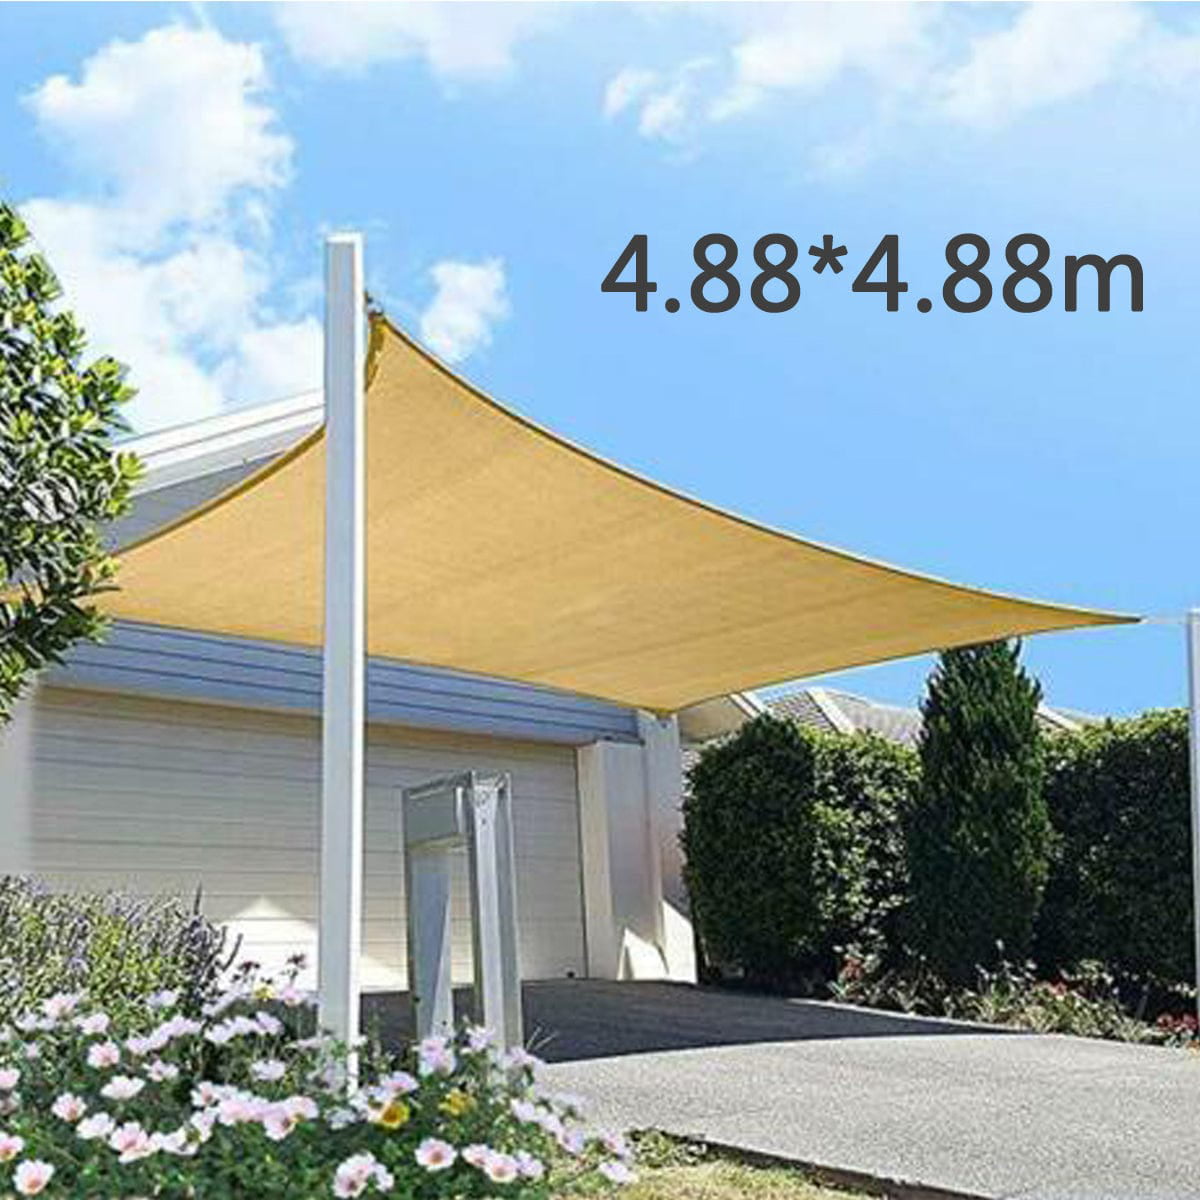 Details about   Outdoor Triangular Sun Shade Sail Garden Patio Sunscreen Awning Canopy Cloth 